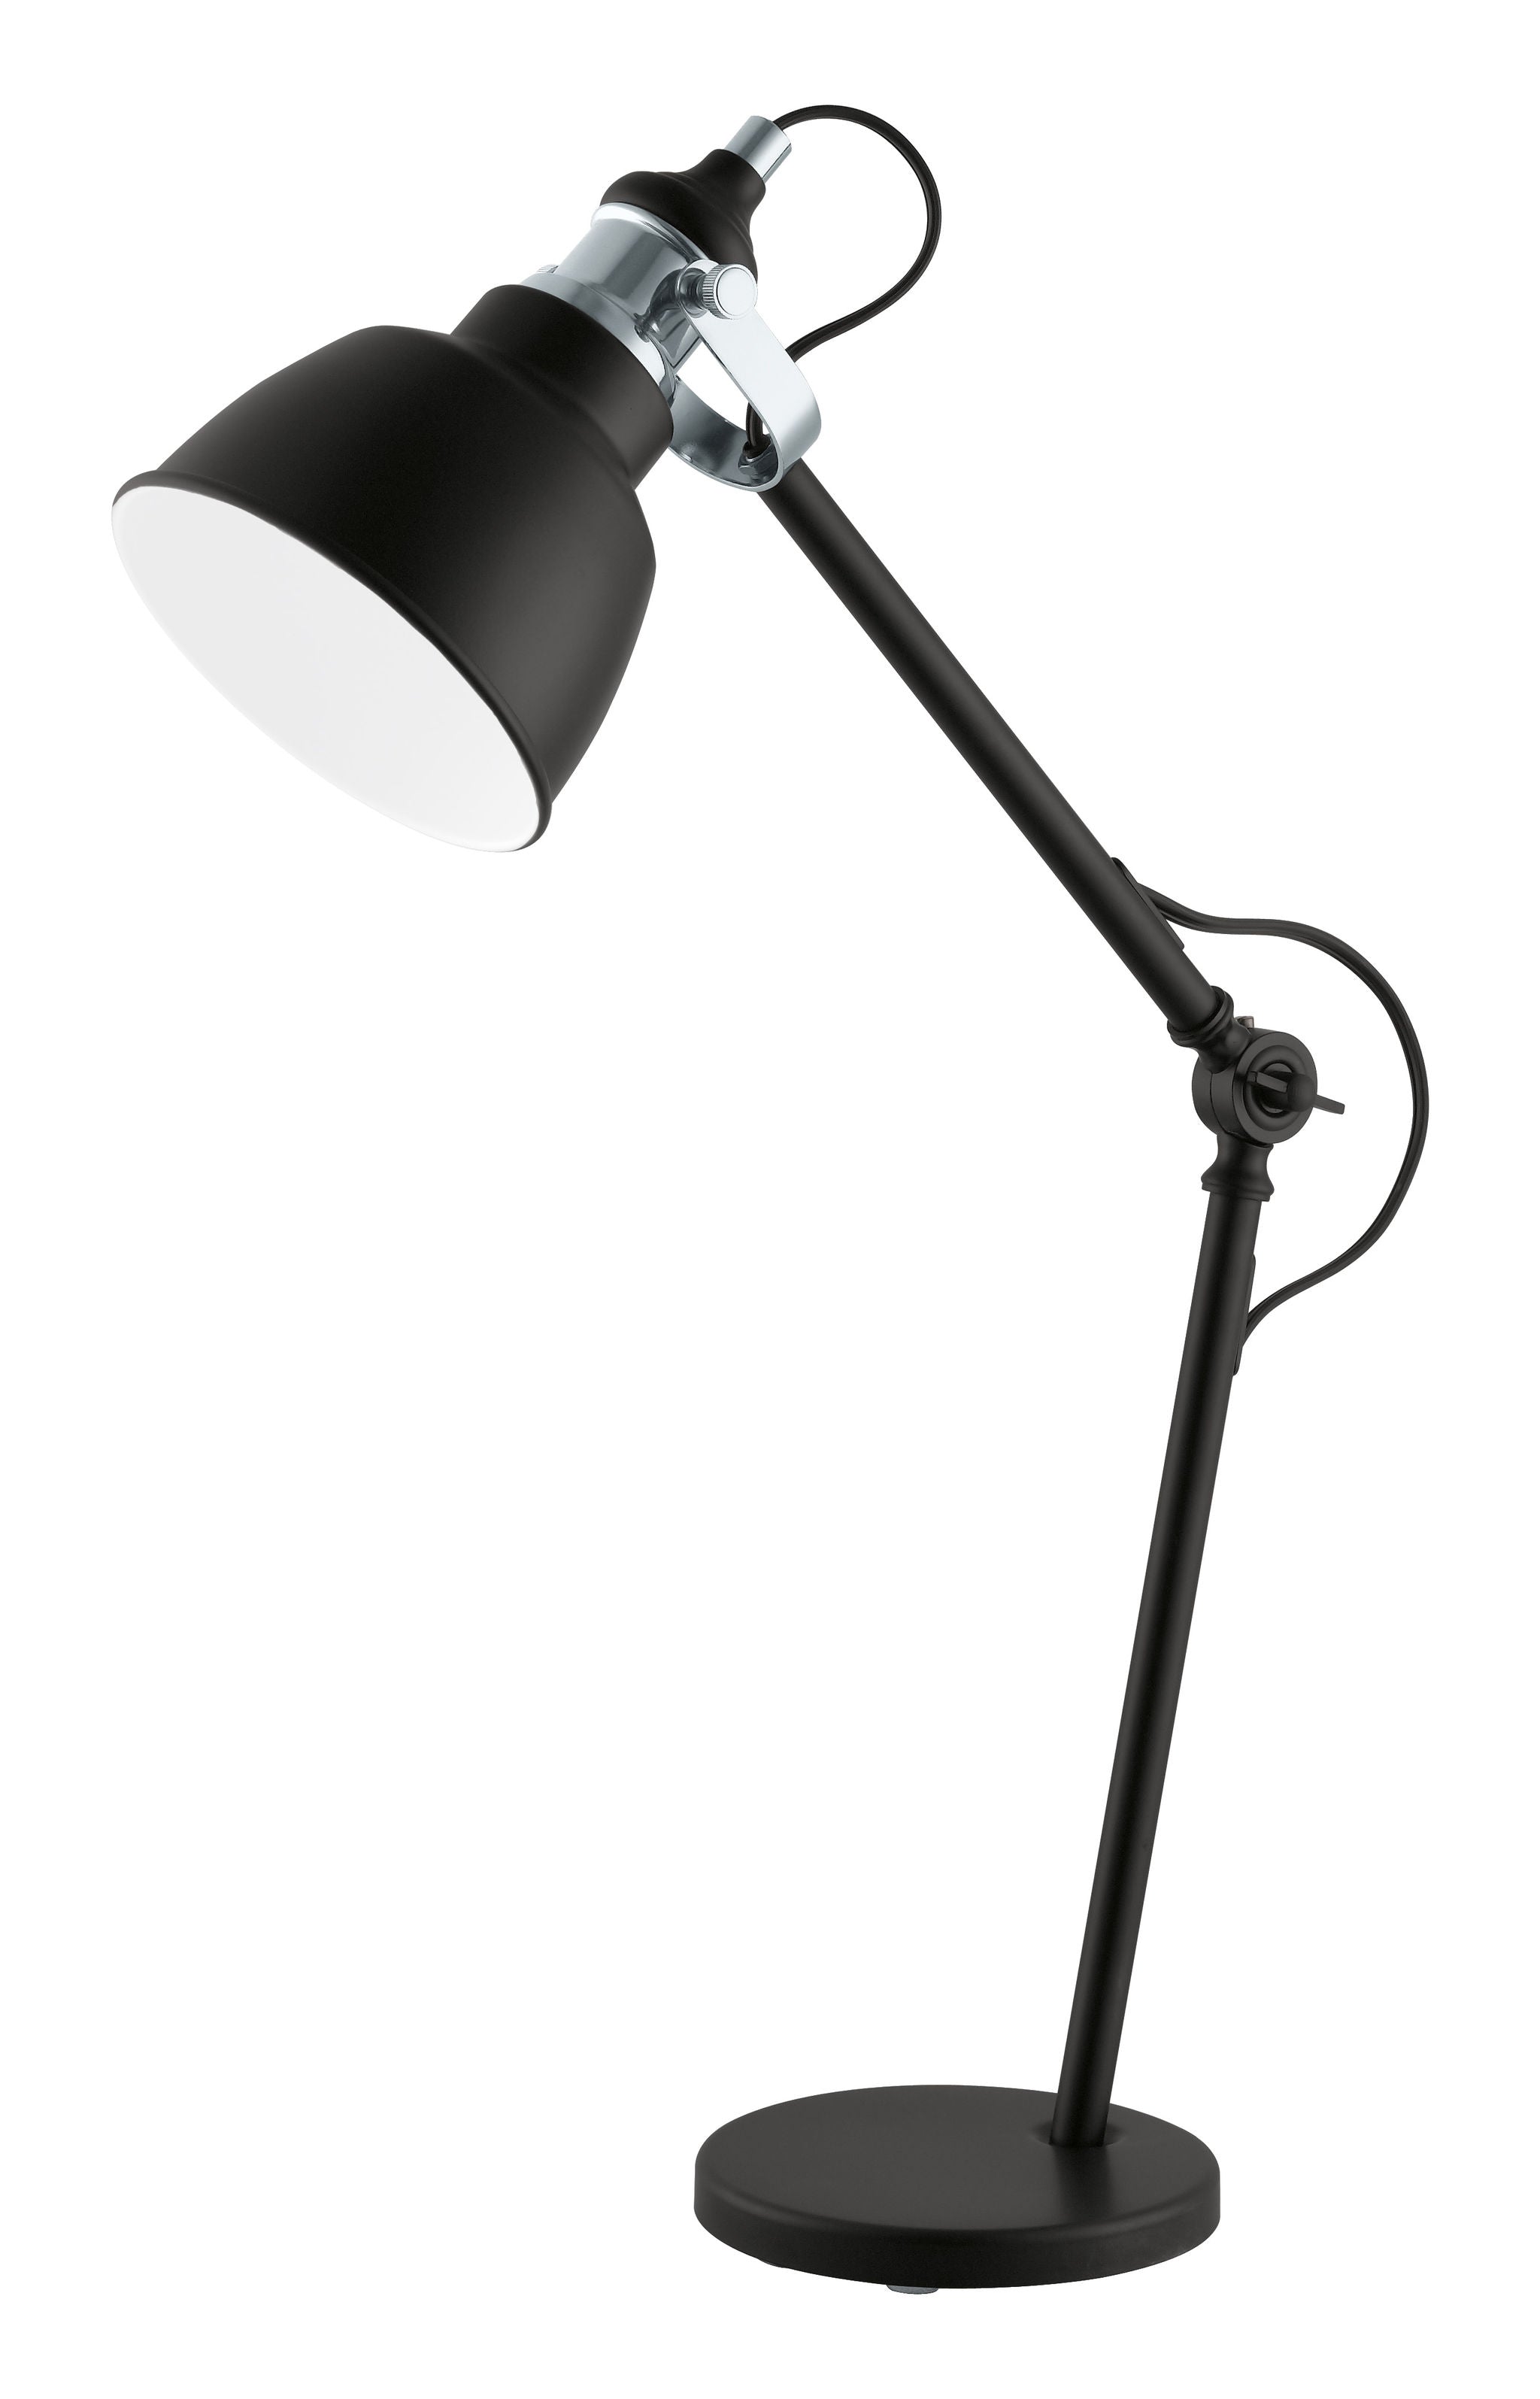 Thornford Lampe sur table Chrome, Noir - 203516A | EGLO